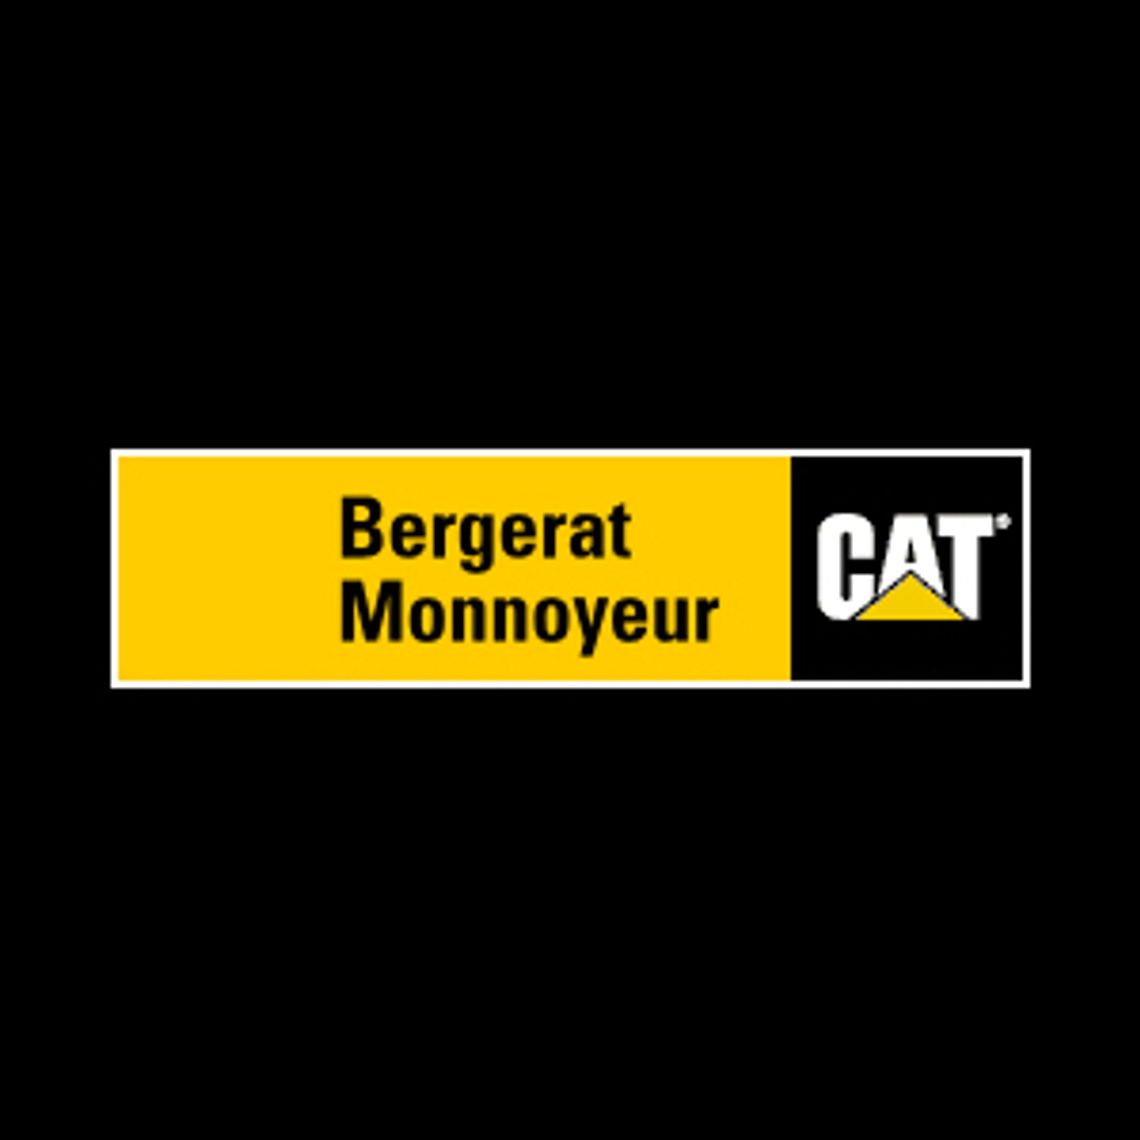 Serwis Caterpillar - Bergerat Monnoyeur